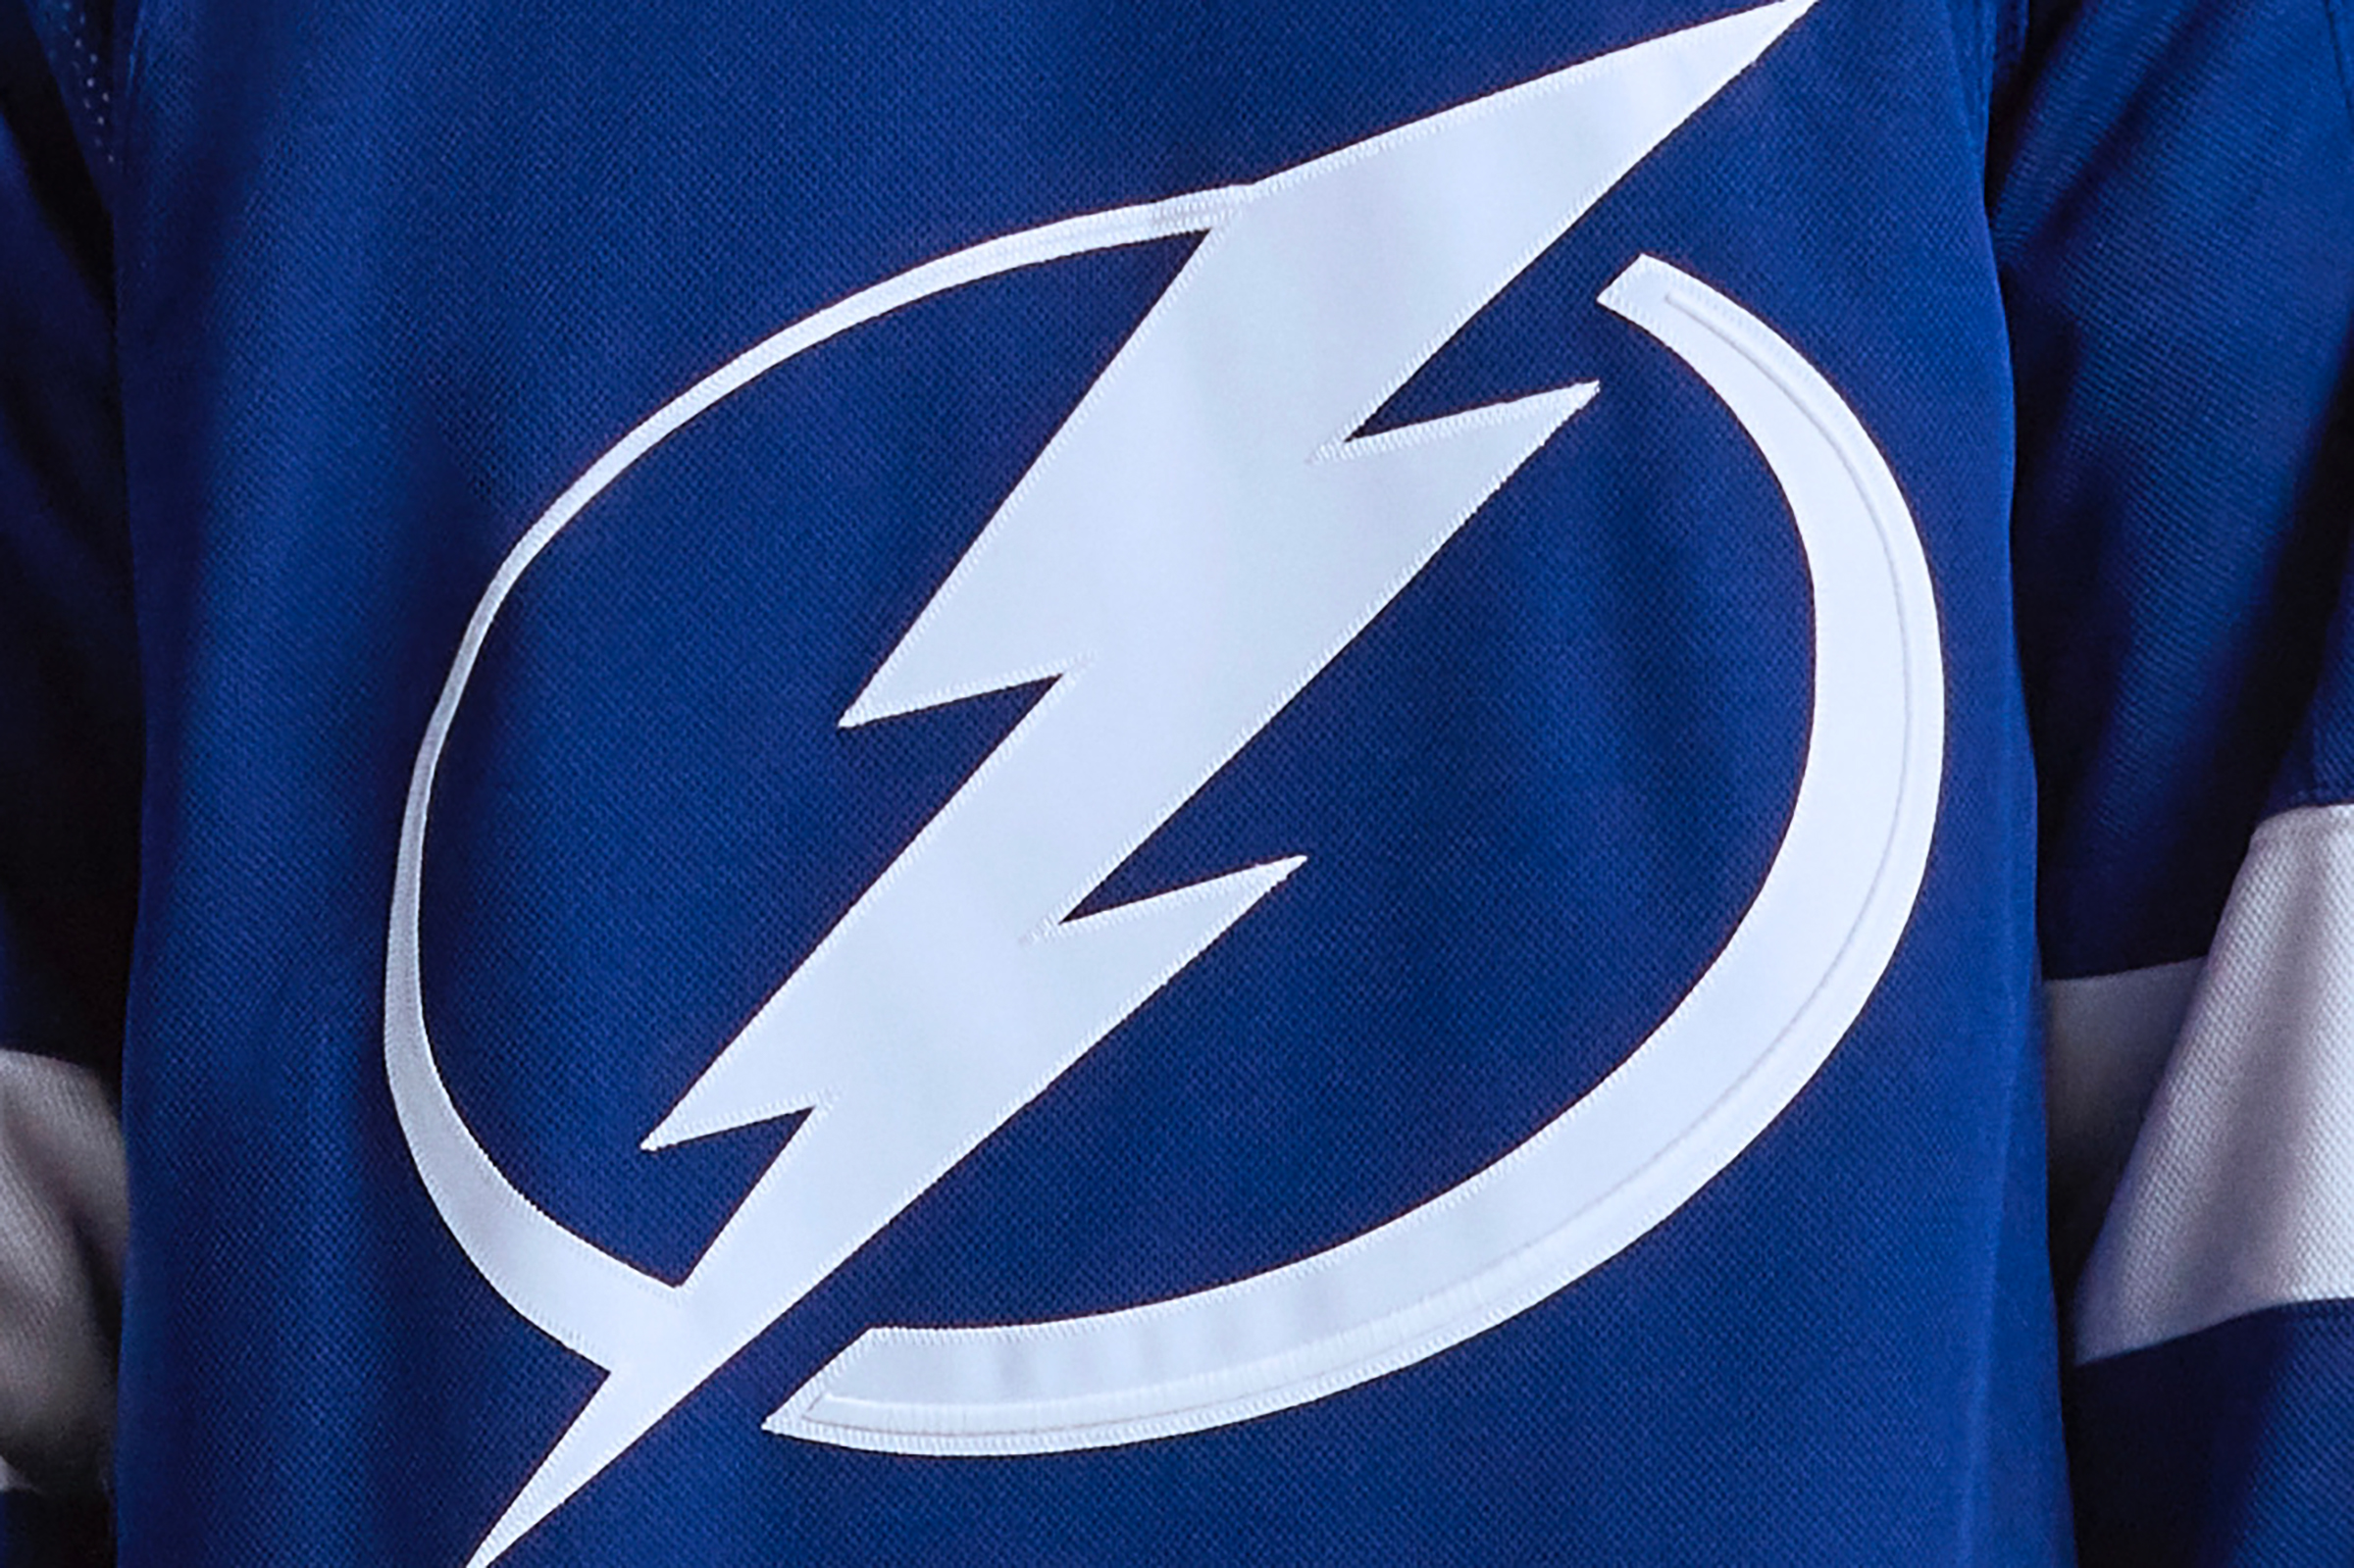 Lightning's new uniform.